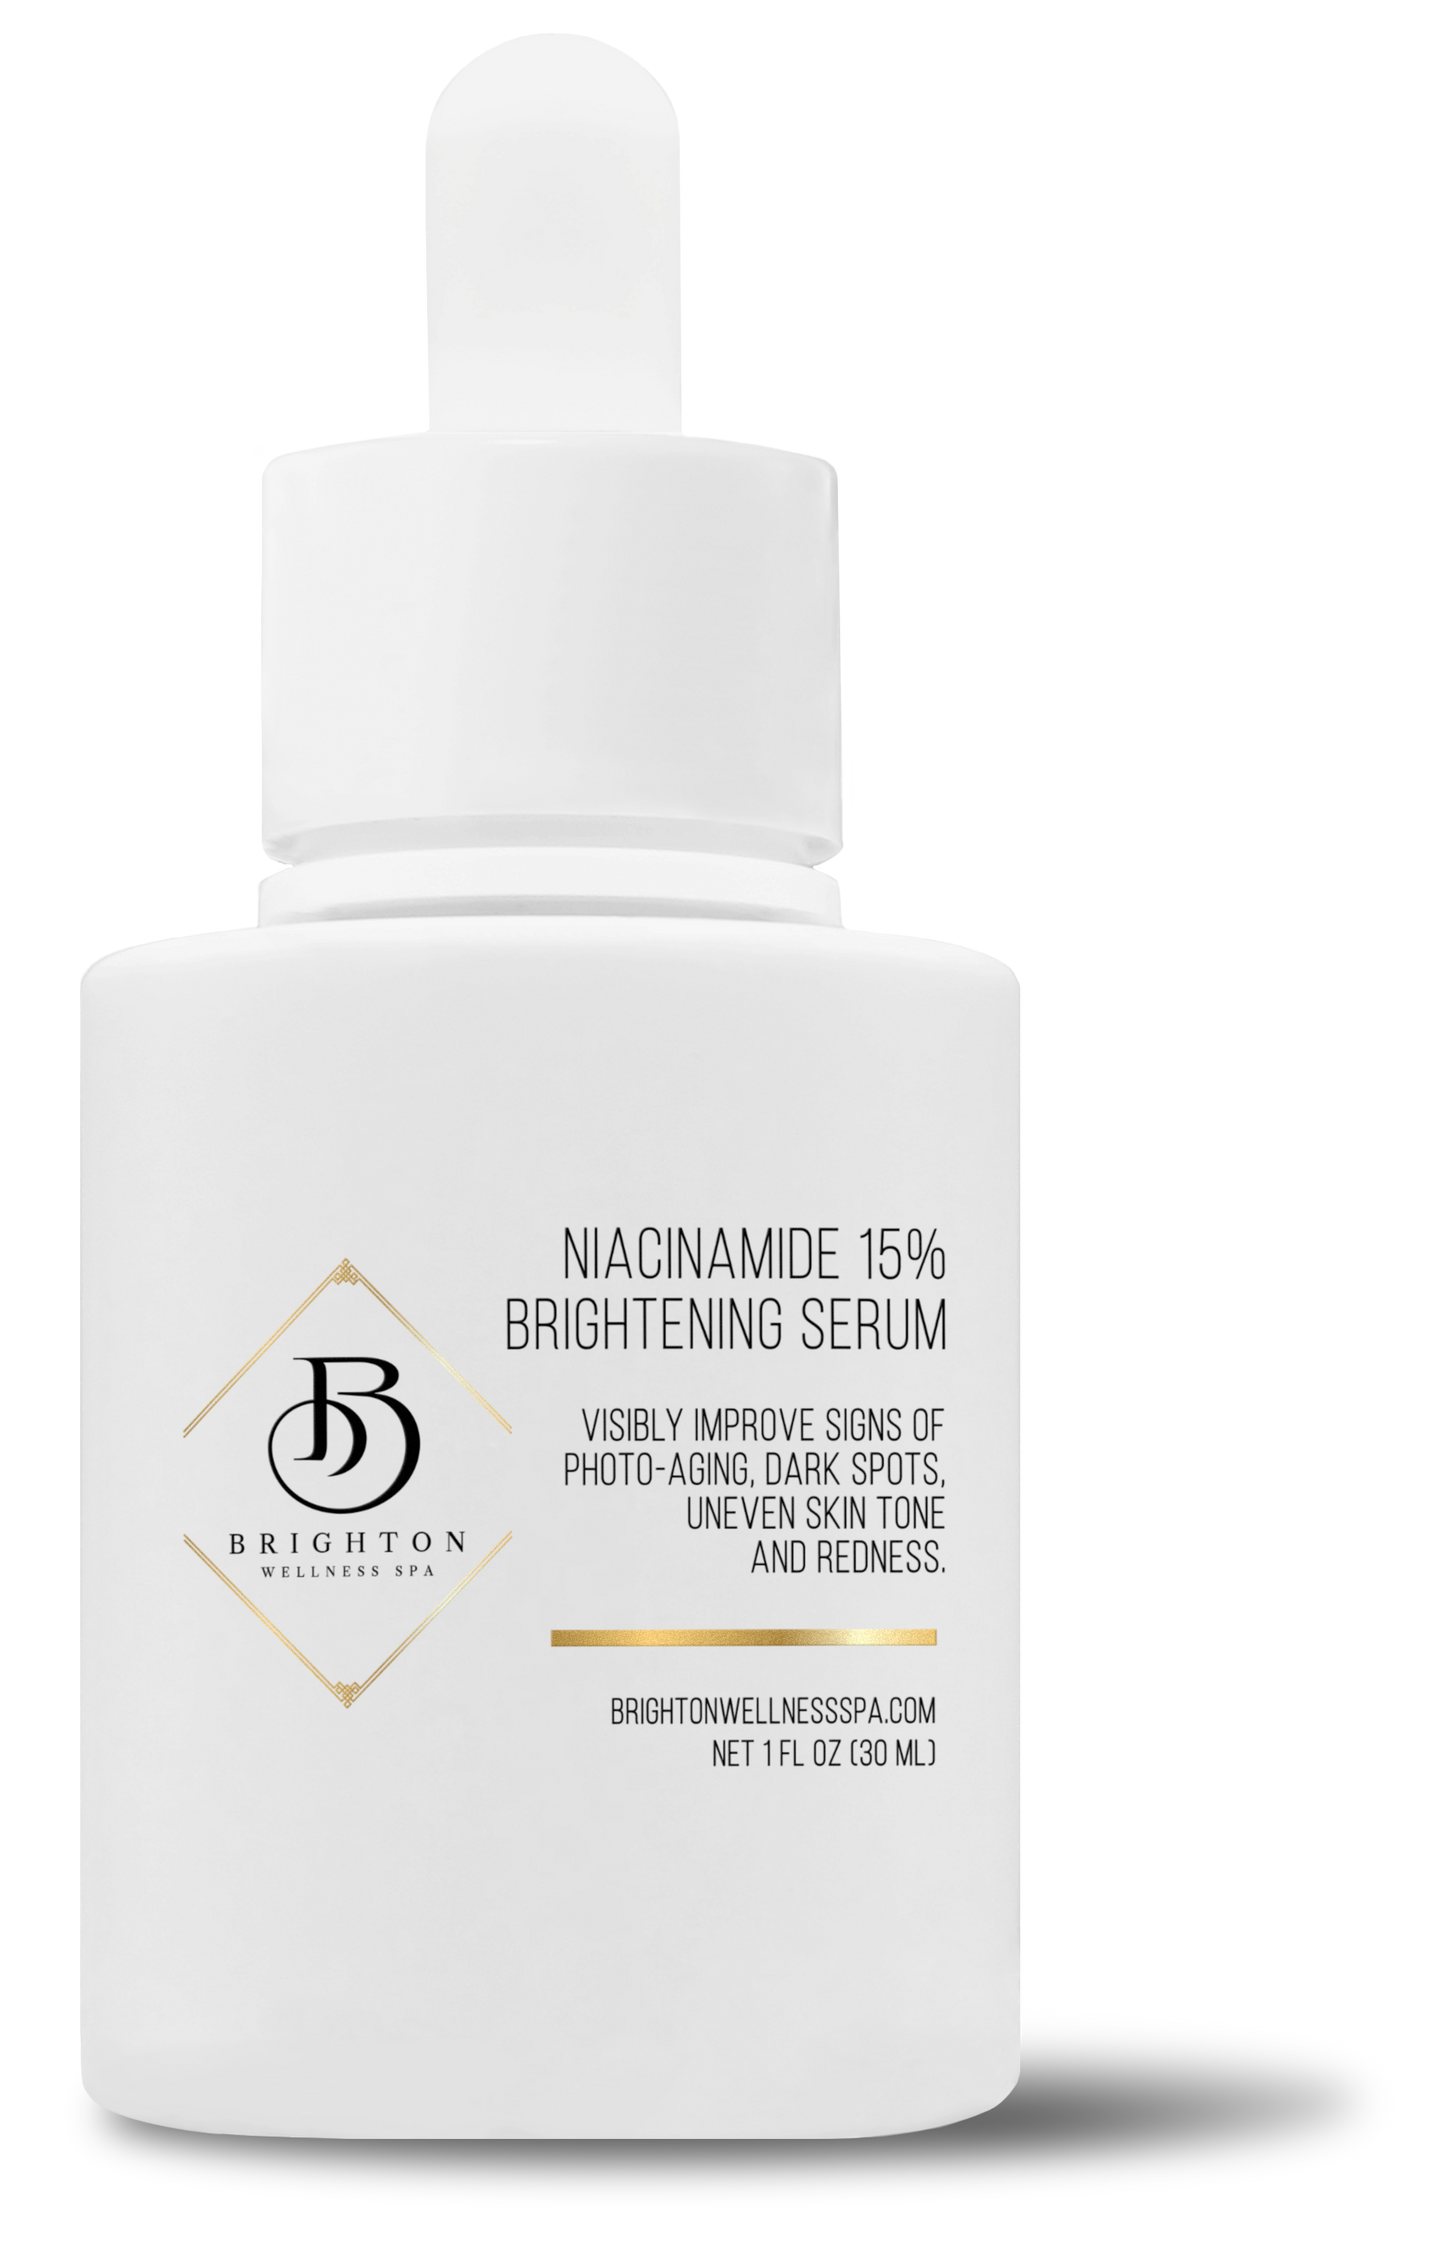 Niacinamide 15% Brightening Serum